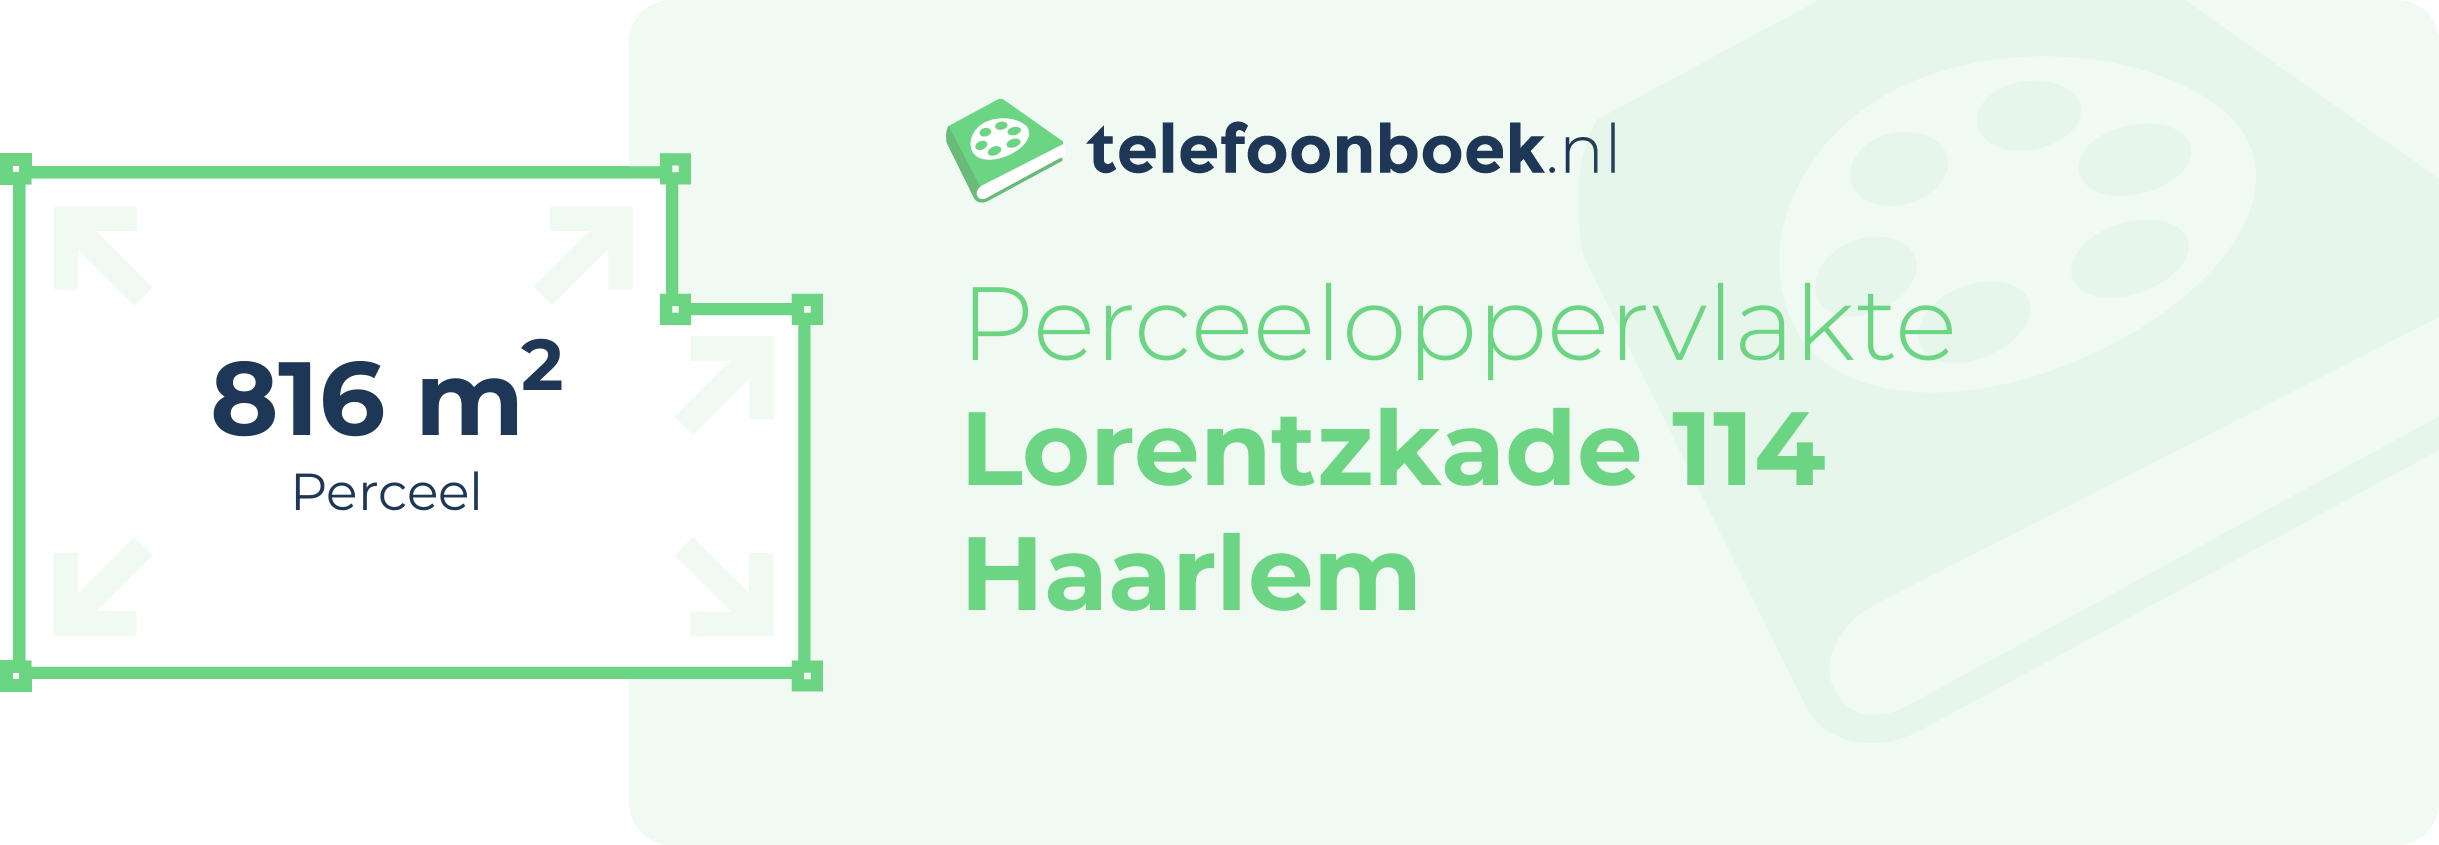 Perceeloppervlakte Lorentzkade 114 Haarlem